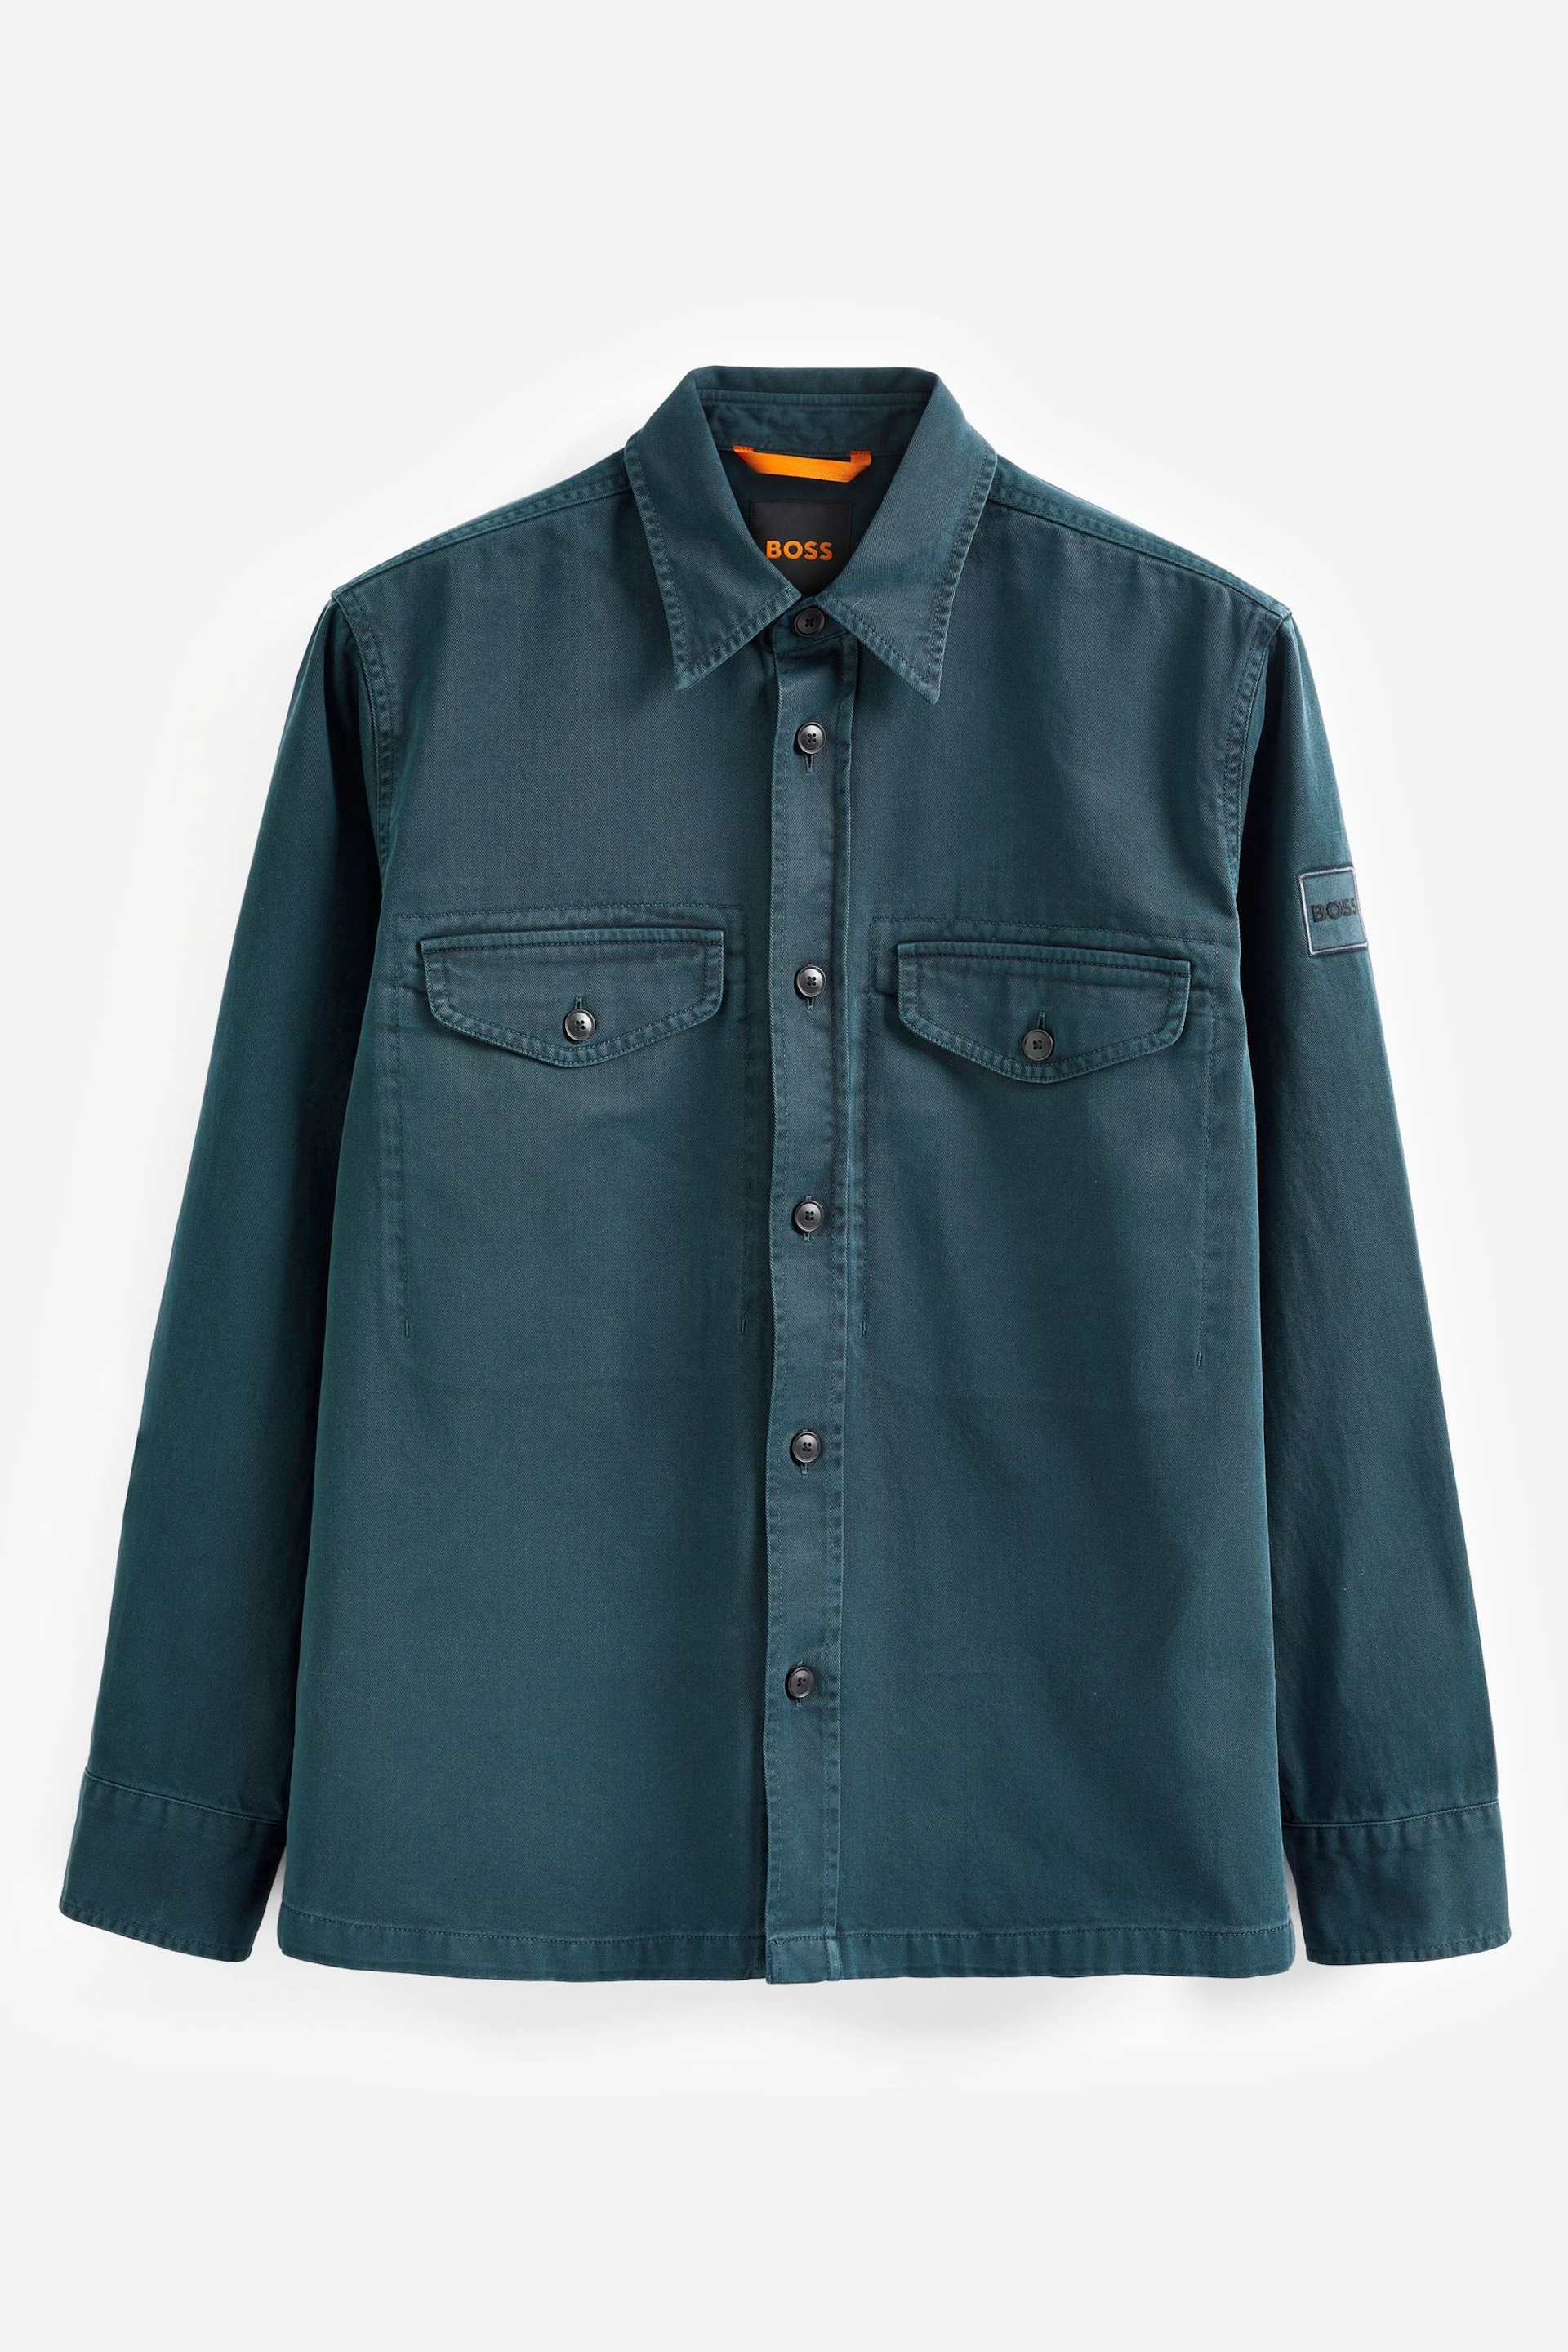 BOSS Green Garment Dyed Twill Overshirt - Image 6 of 6